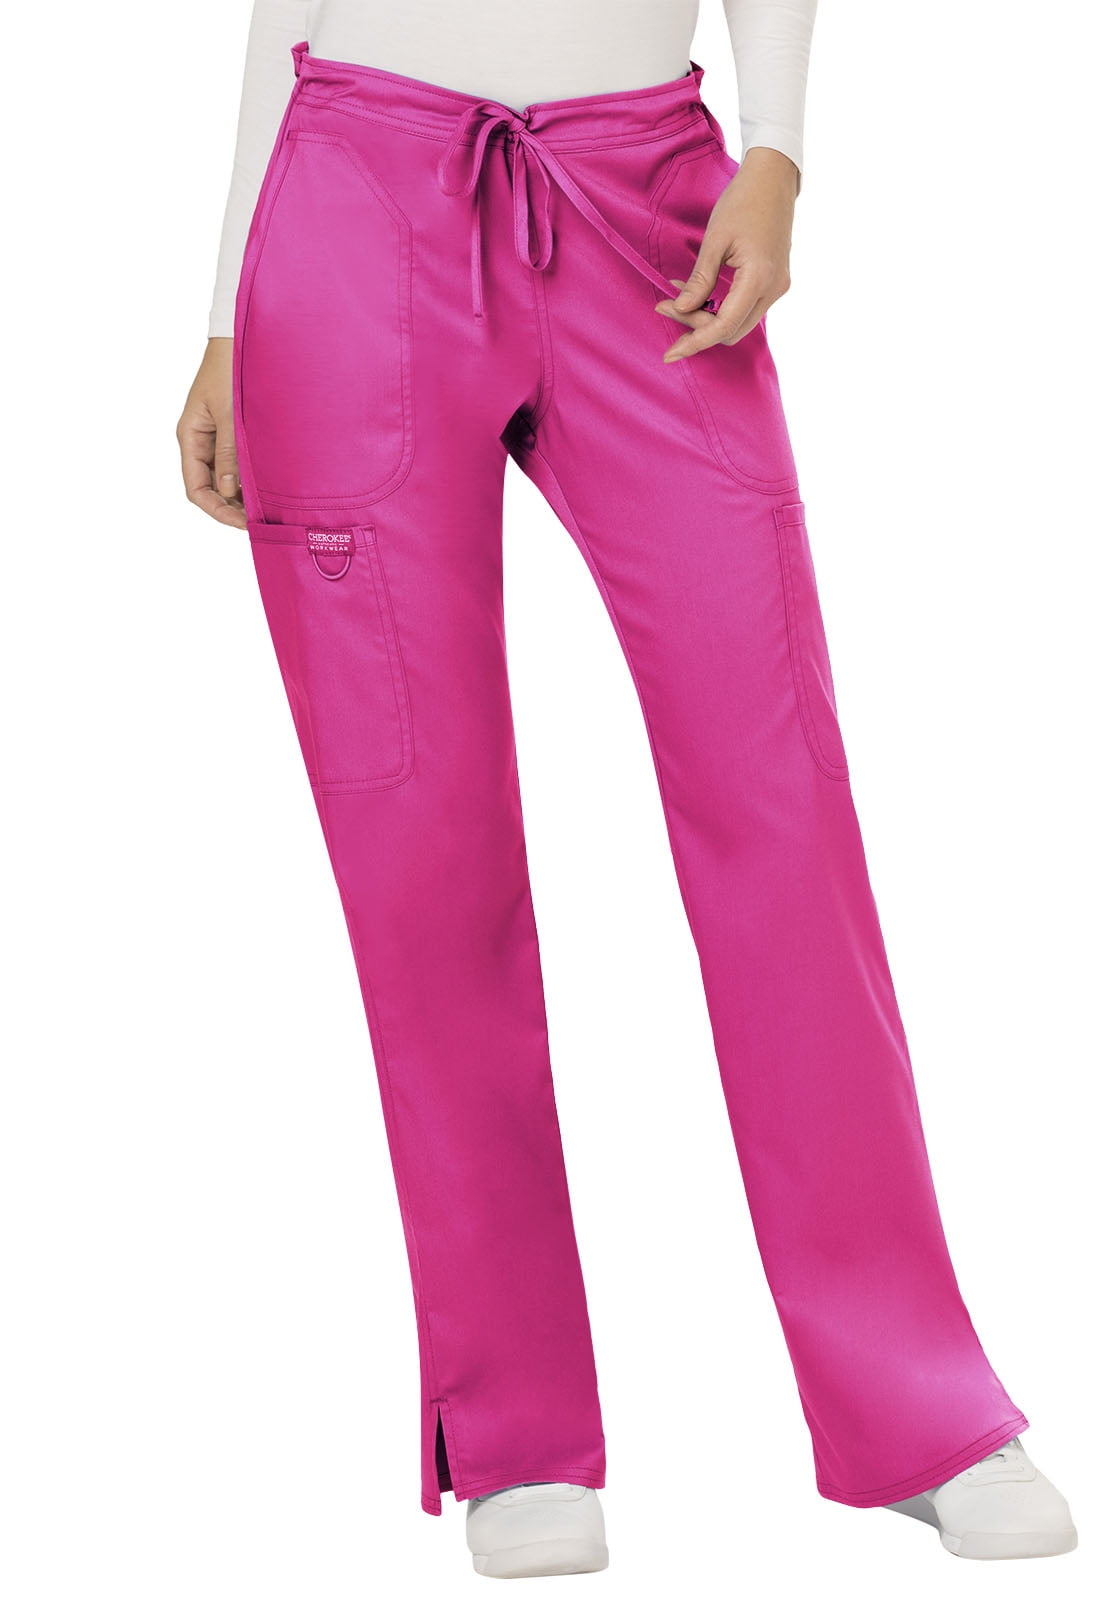 Electric Pink Cherokee Scrubs Workwear Revolution Pull On Pants WW110 EEPI 